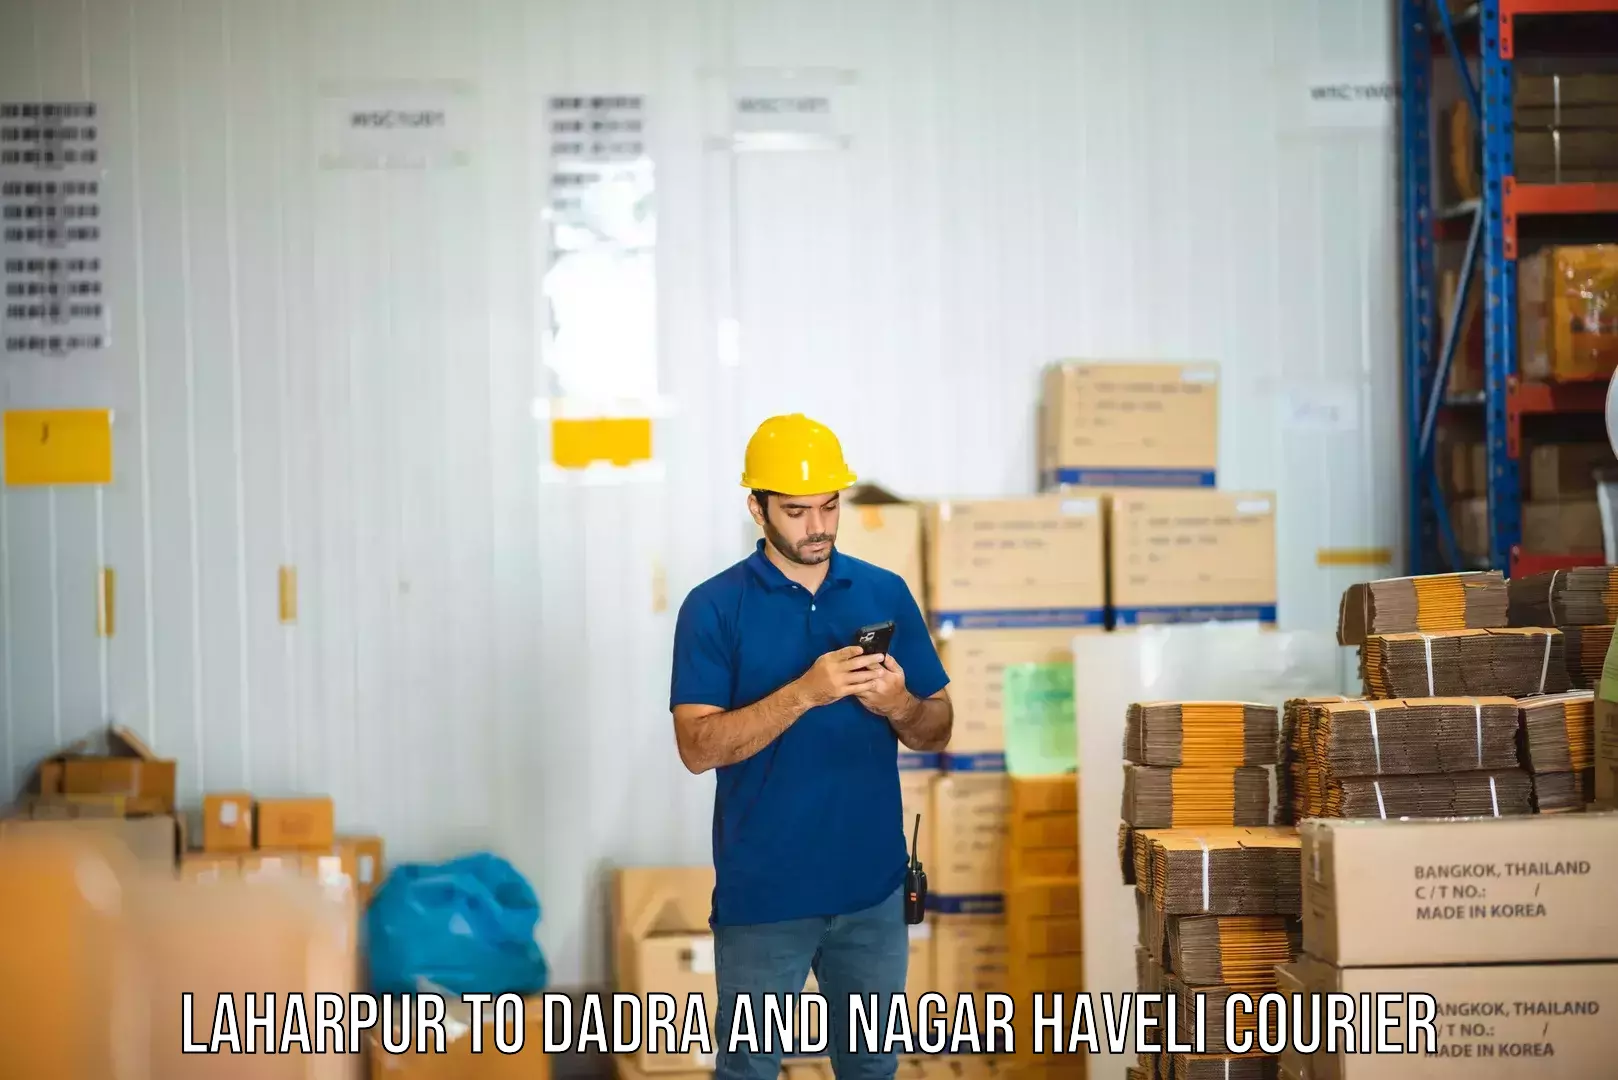 Small business couriers Laharpur to Dadra and Nagar Haveli